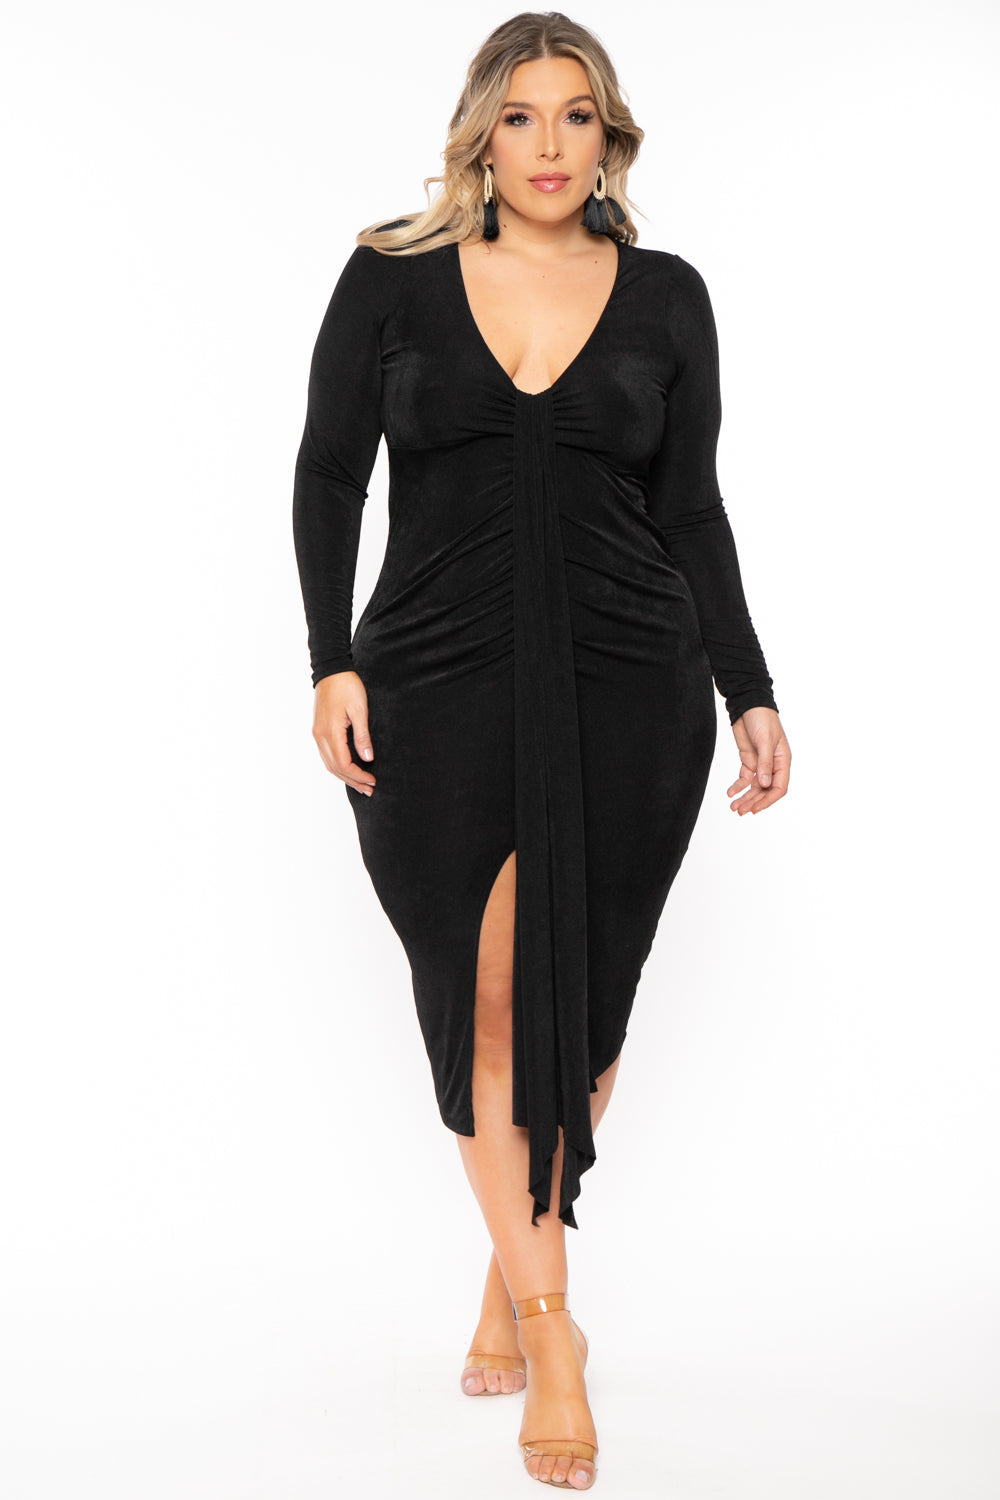 Curvy Sense Dresses 1X / Black Plus Size Solara Slinky Midi Dress - Black